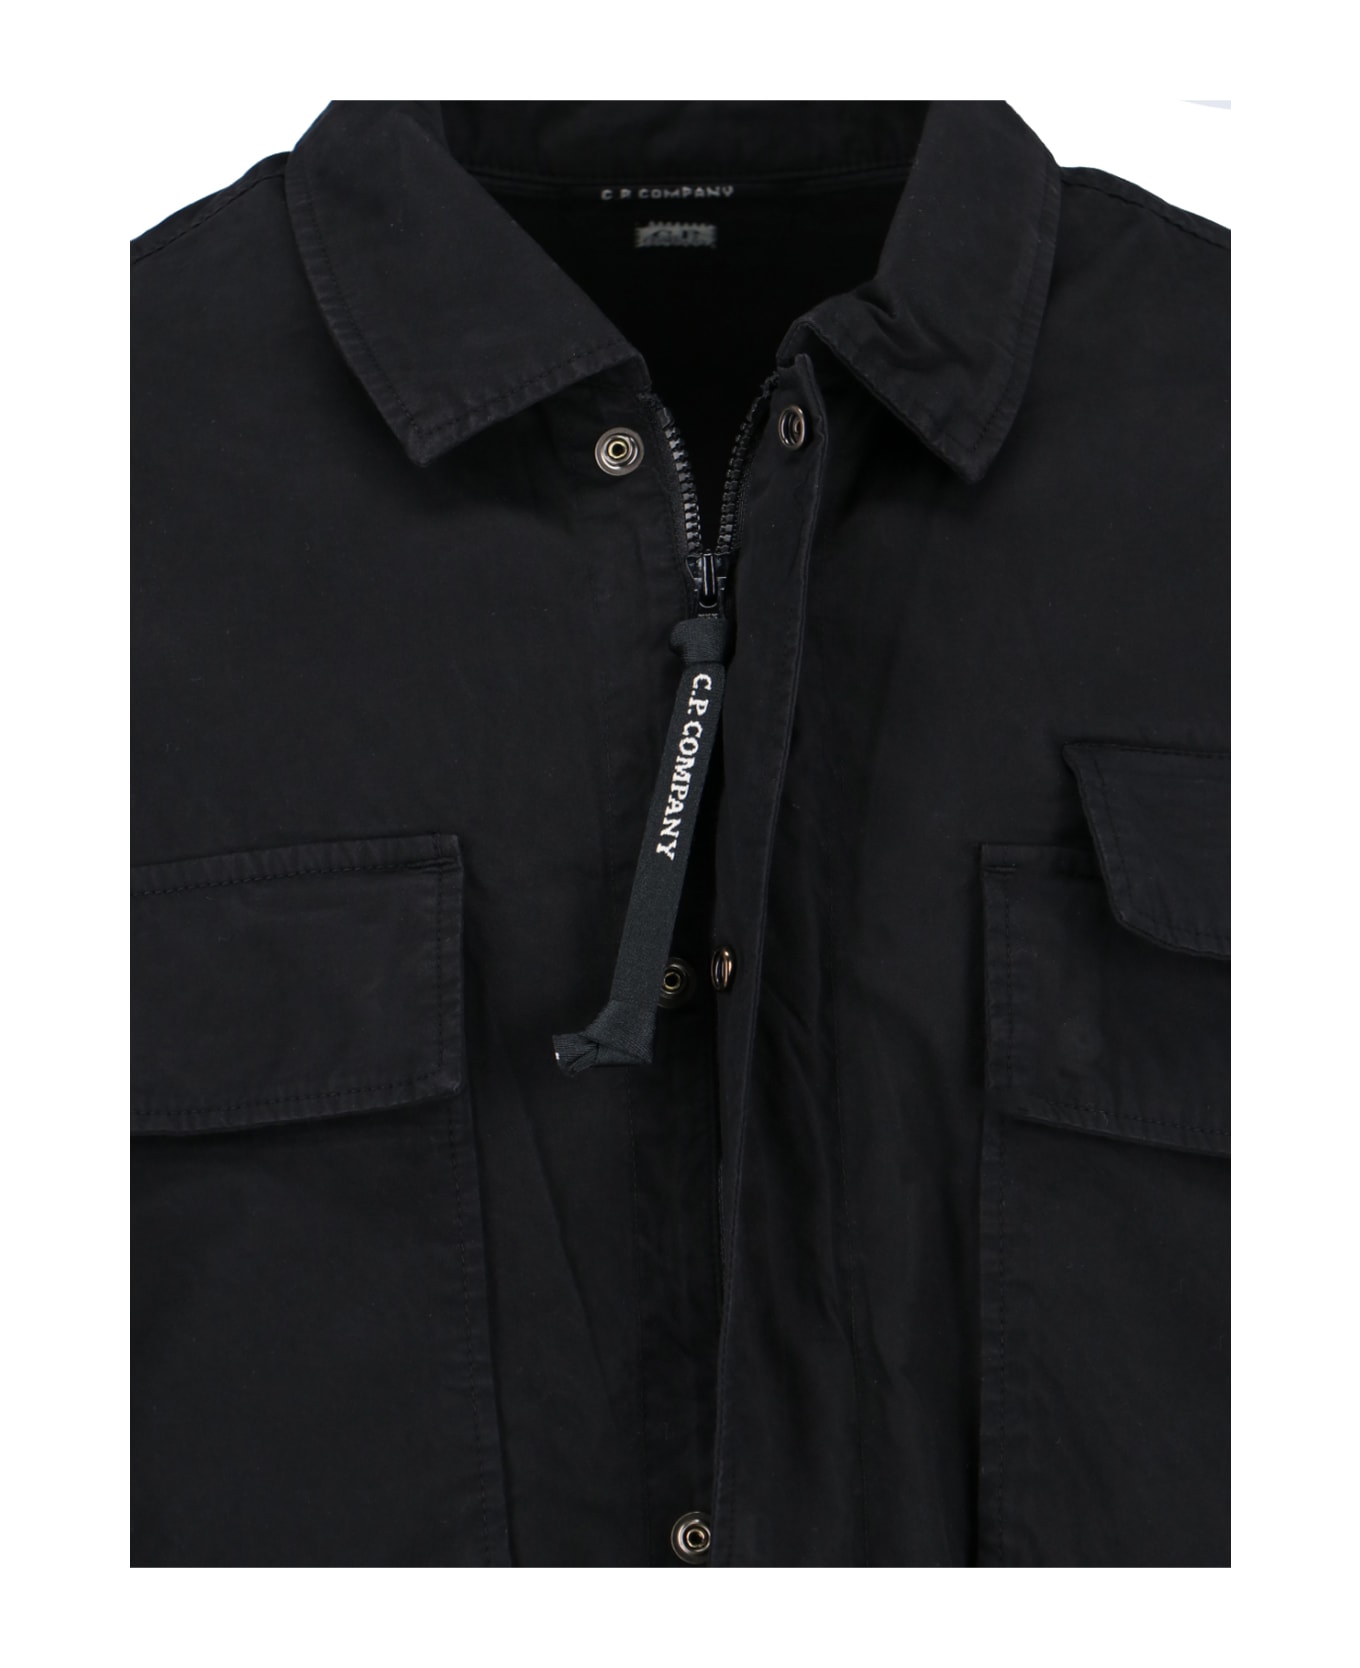 C.P. Company 'lens' Shirt Jacket - Black シャツ